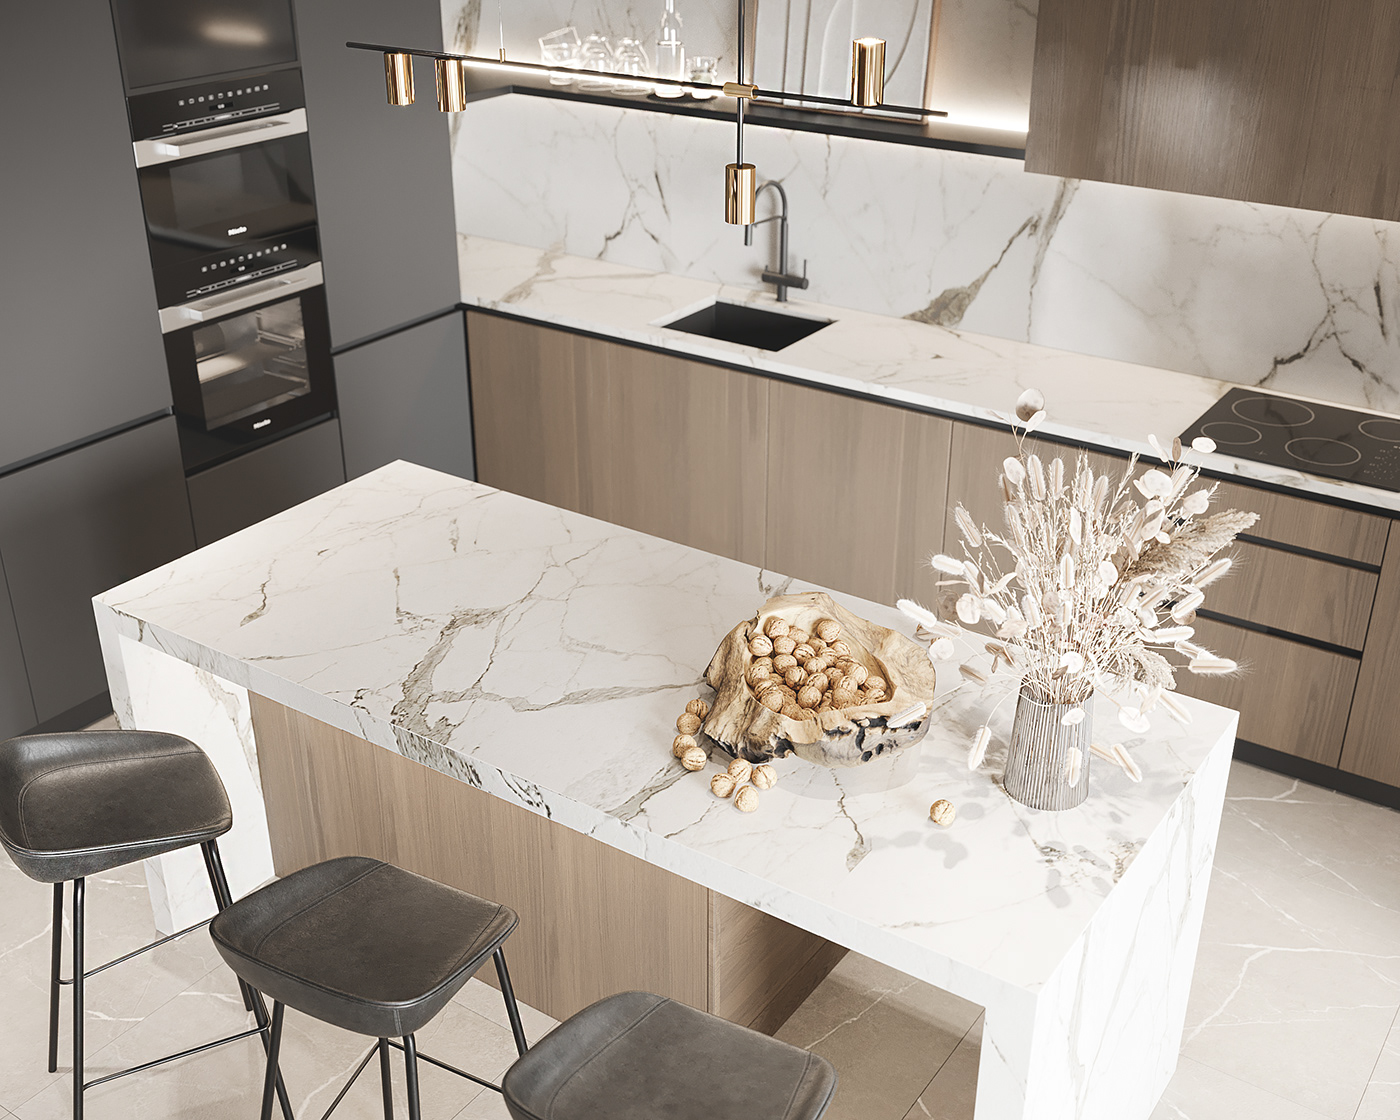 3ds max corona Interior interior design  kitchen living room modern Render visualization